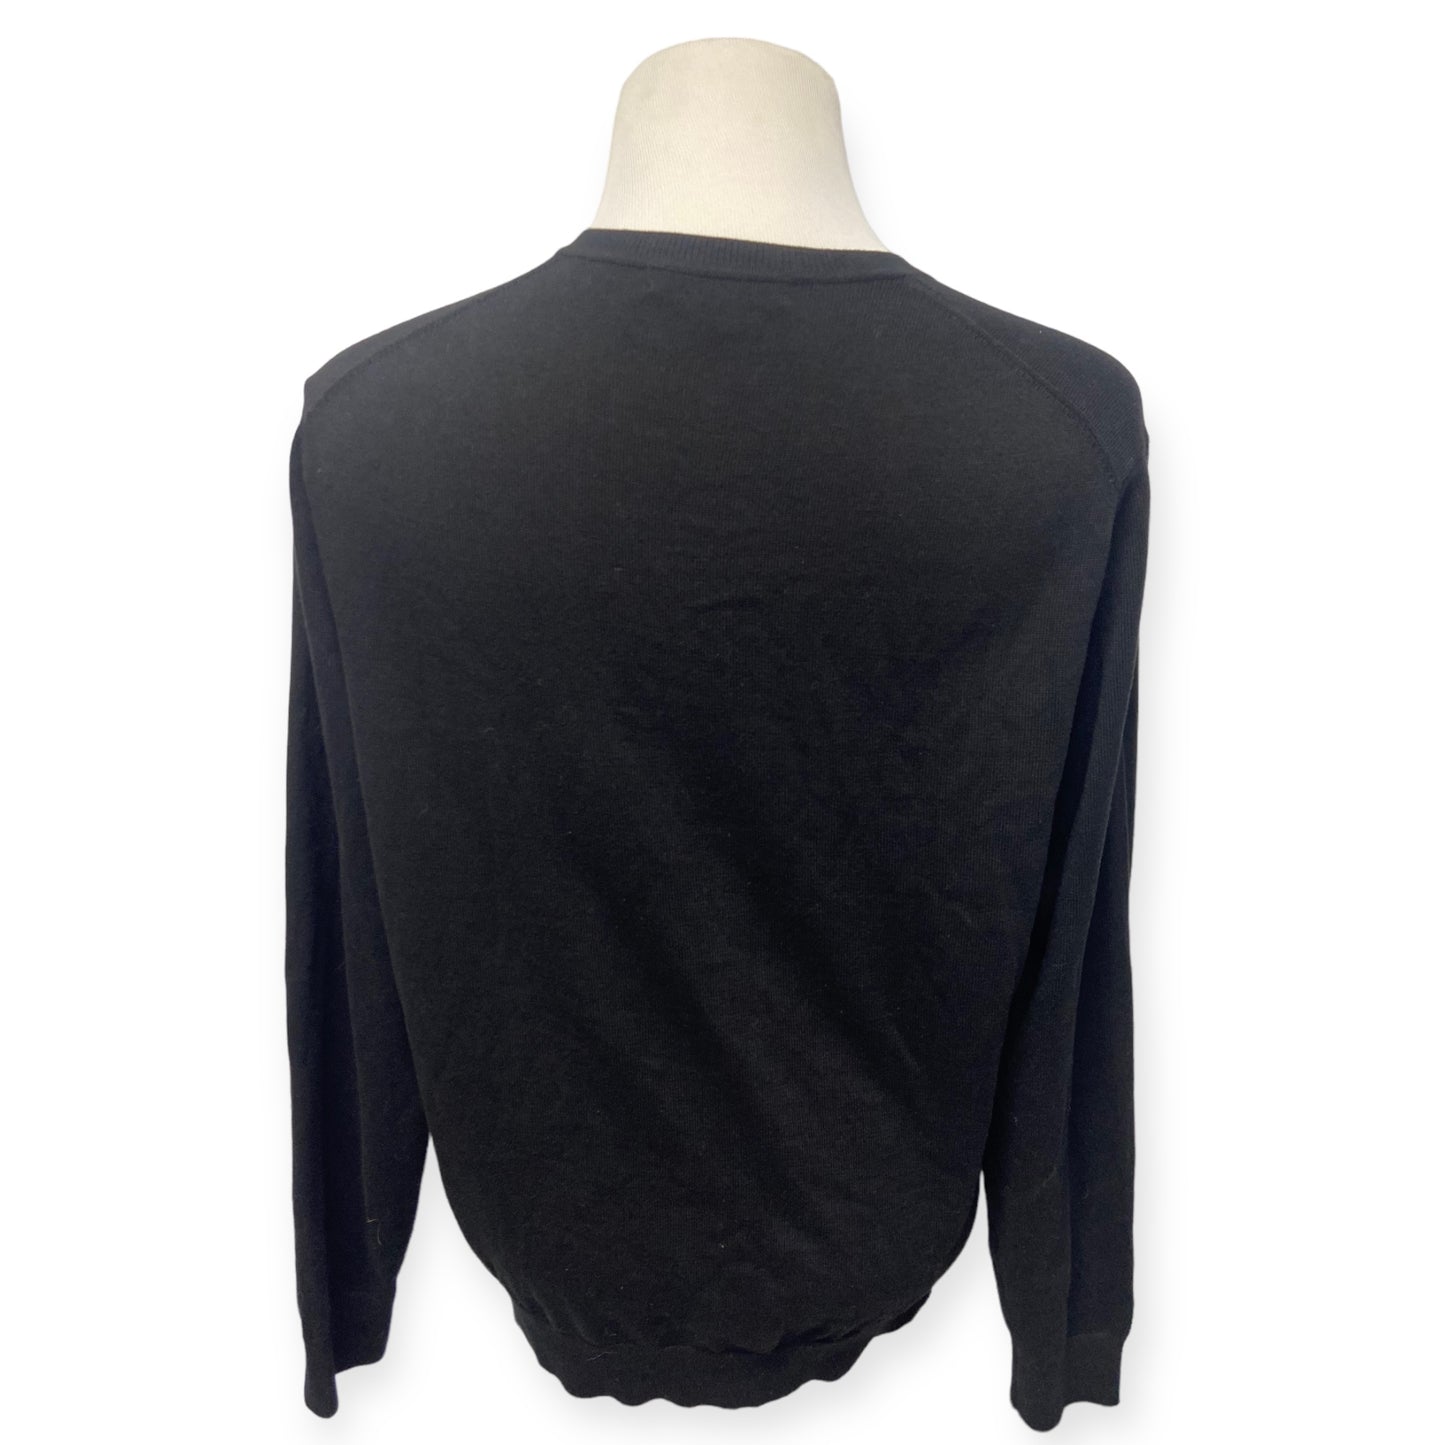 Michael Kors Men’s Black Sweater (Size L)